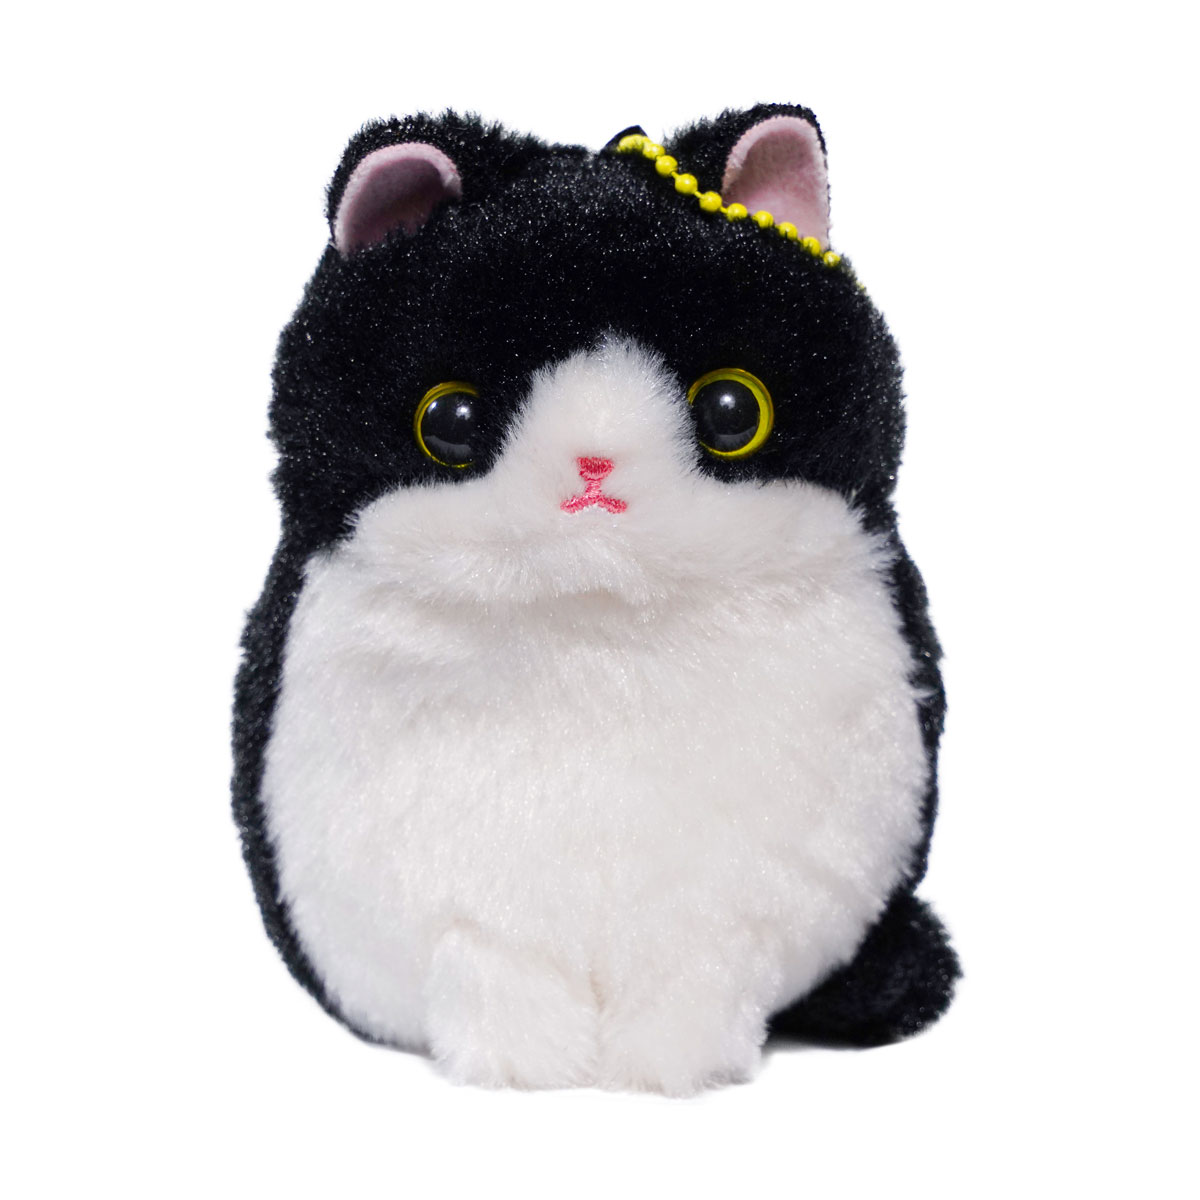 Kawaii Neko Kitten Stuffed Animal Cat Plushie Black Keychain Size 4